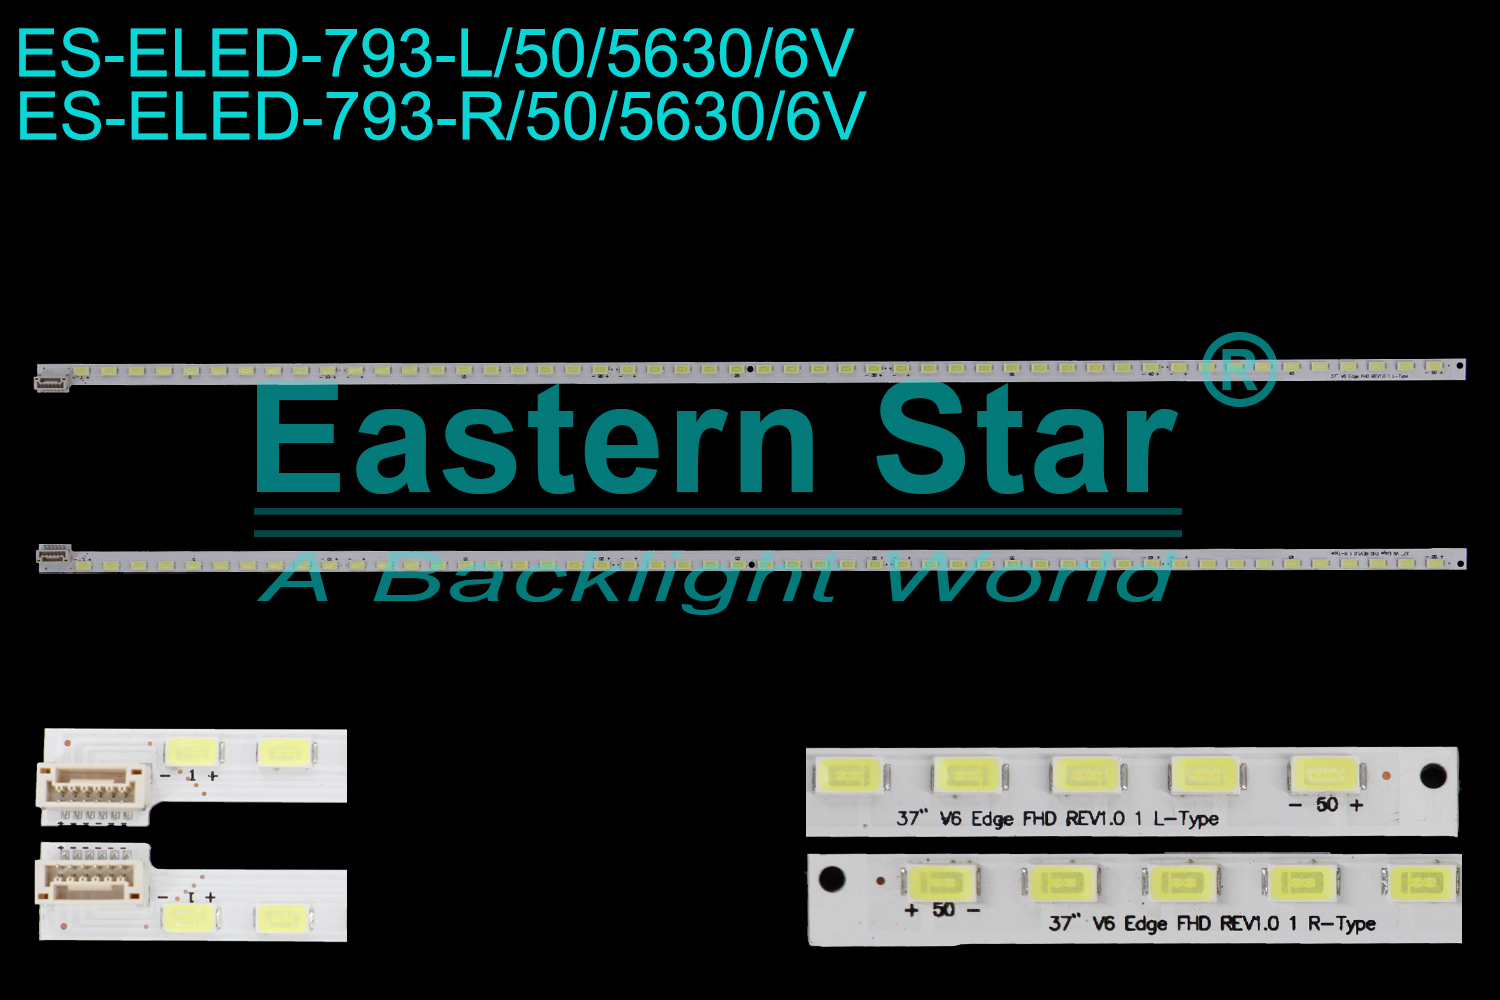 ES-ELED-793 ELED/EDGE TV backlight use for 37'' Lg/Skyworth/Changhong 37LW5400 37" V6 Edge FHD REV1.0 L-Type, 37" V6 Edge FHD REV1.0 R-Type, 3660L-0385A , 3660L-0379A LED STRIPS(2)